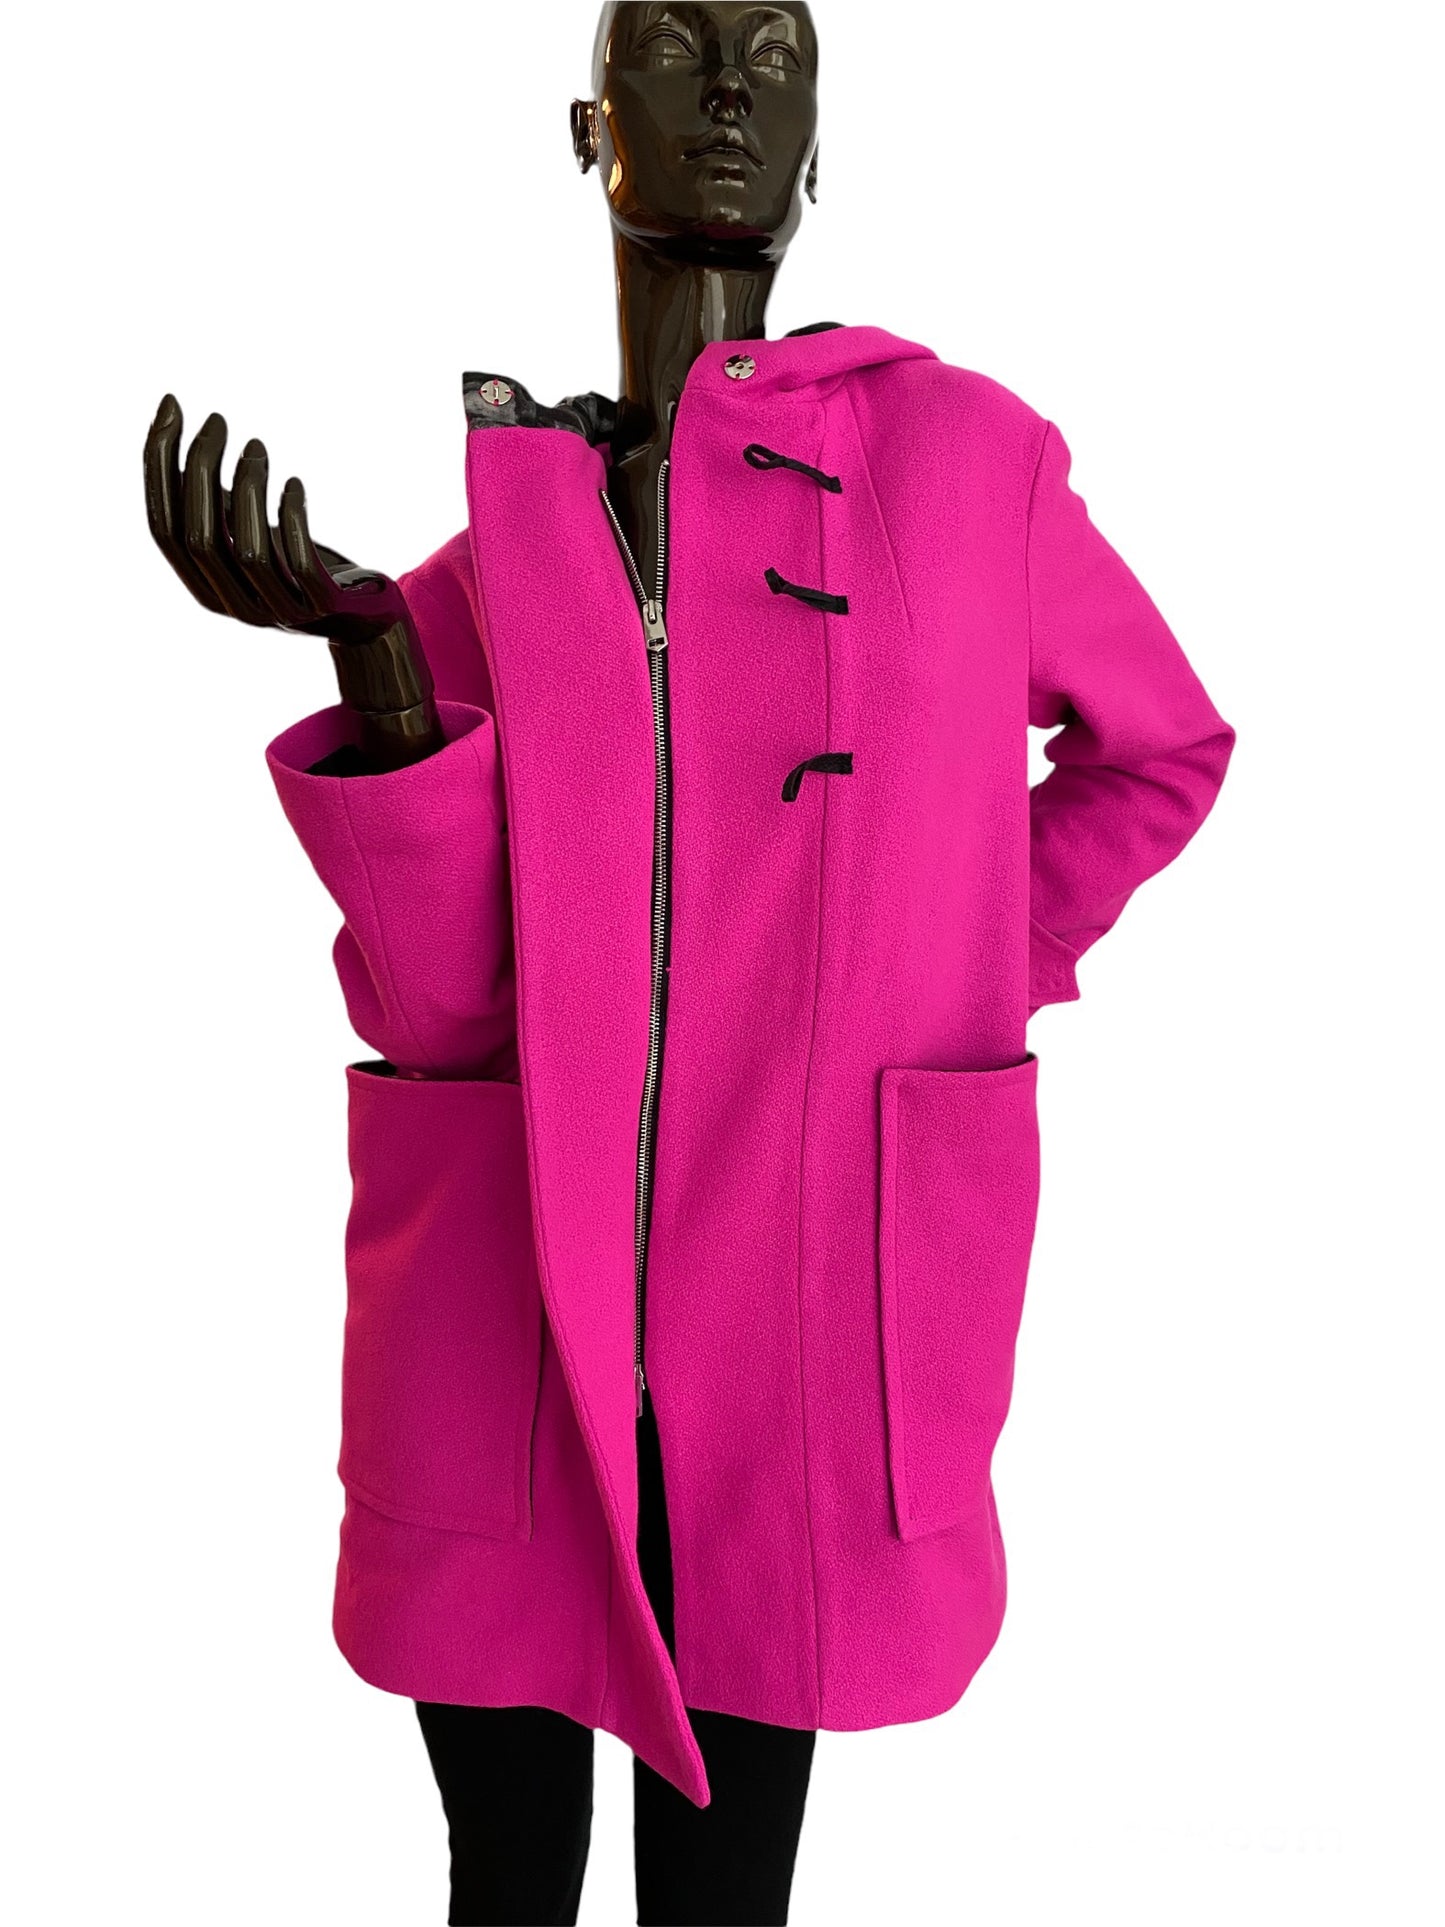 NY 77 Design Hot Pink Color Wool Coat